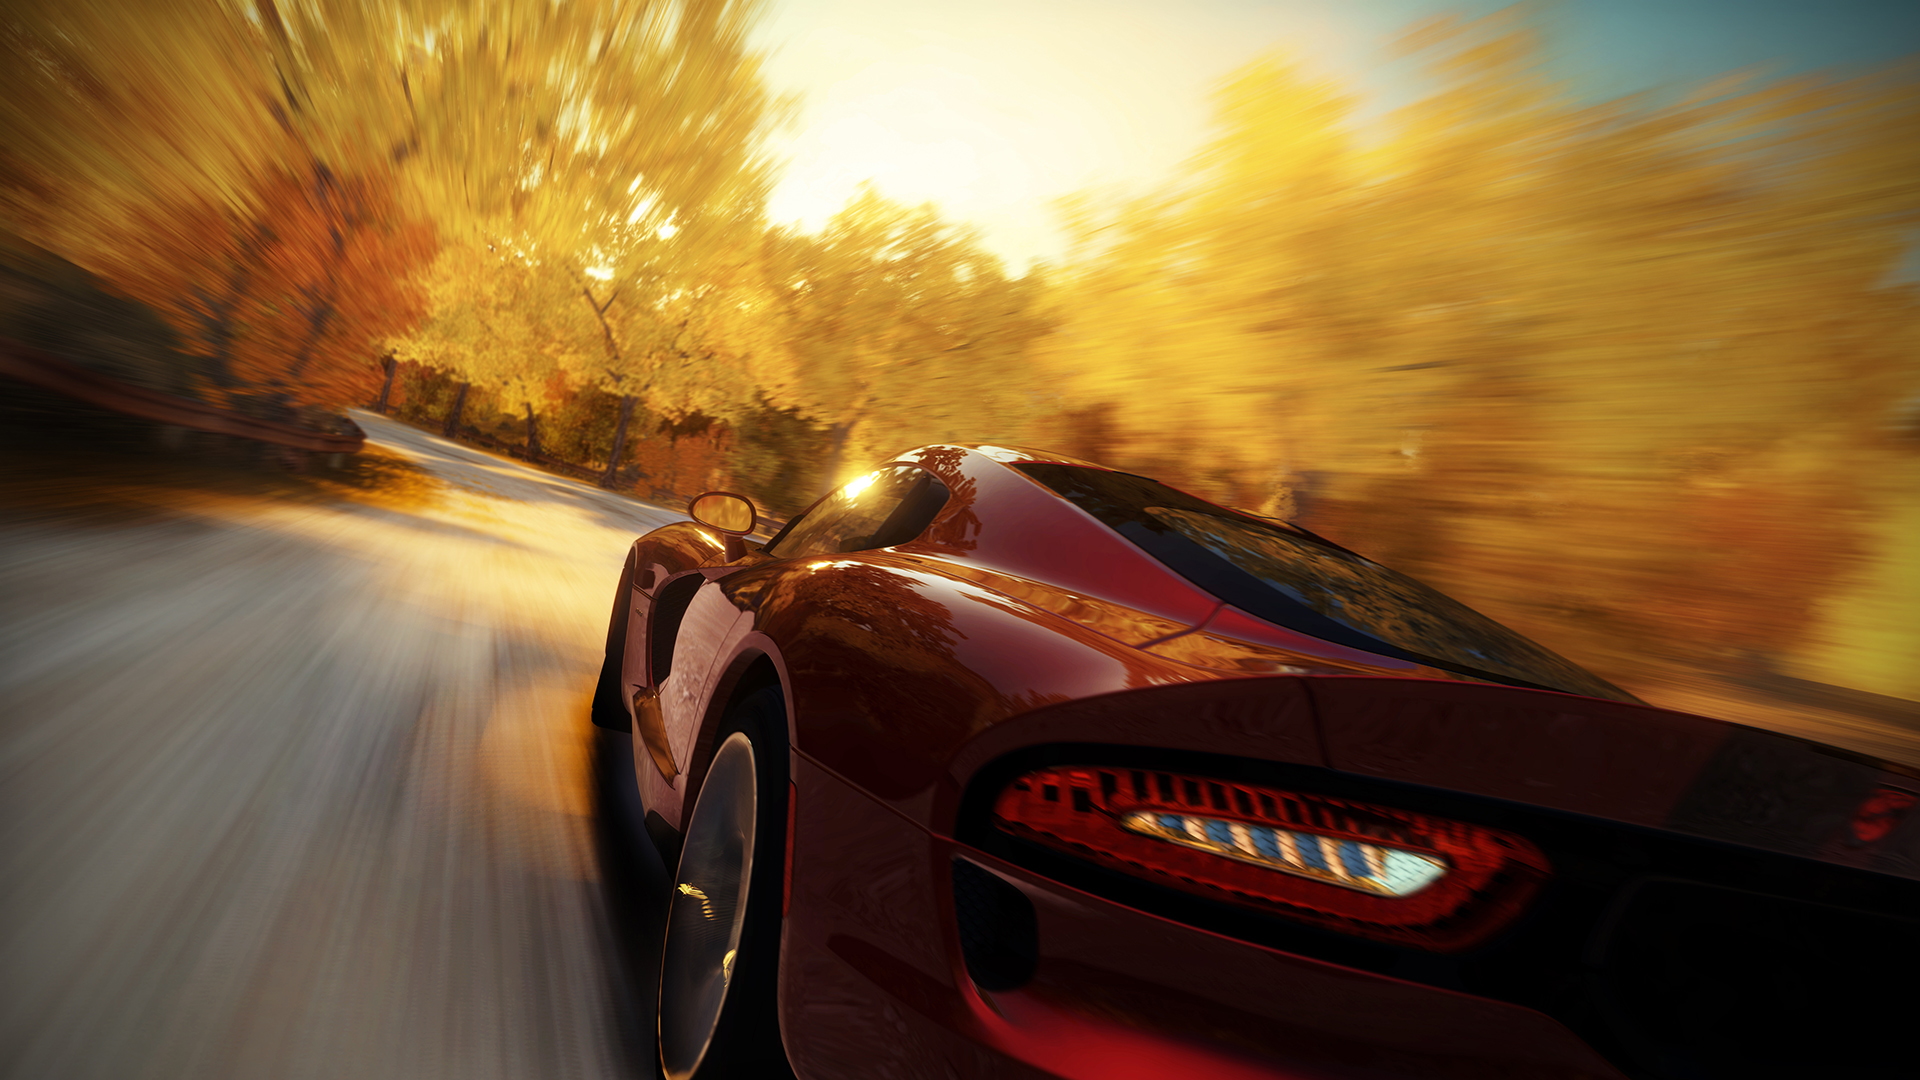 Screen grabs from Forza Horizon